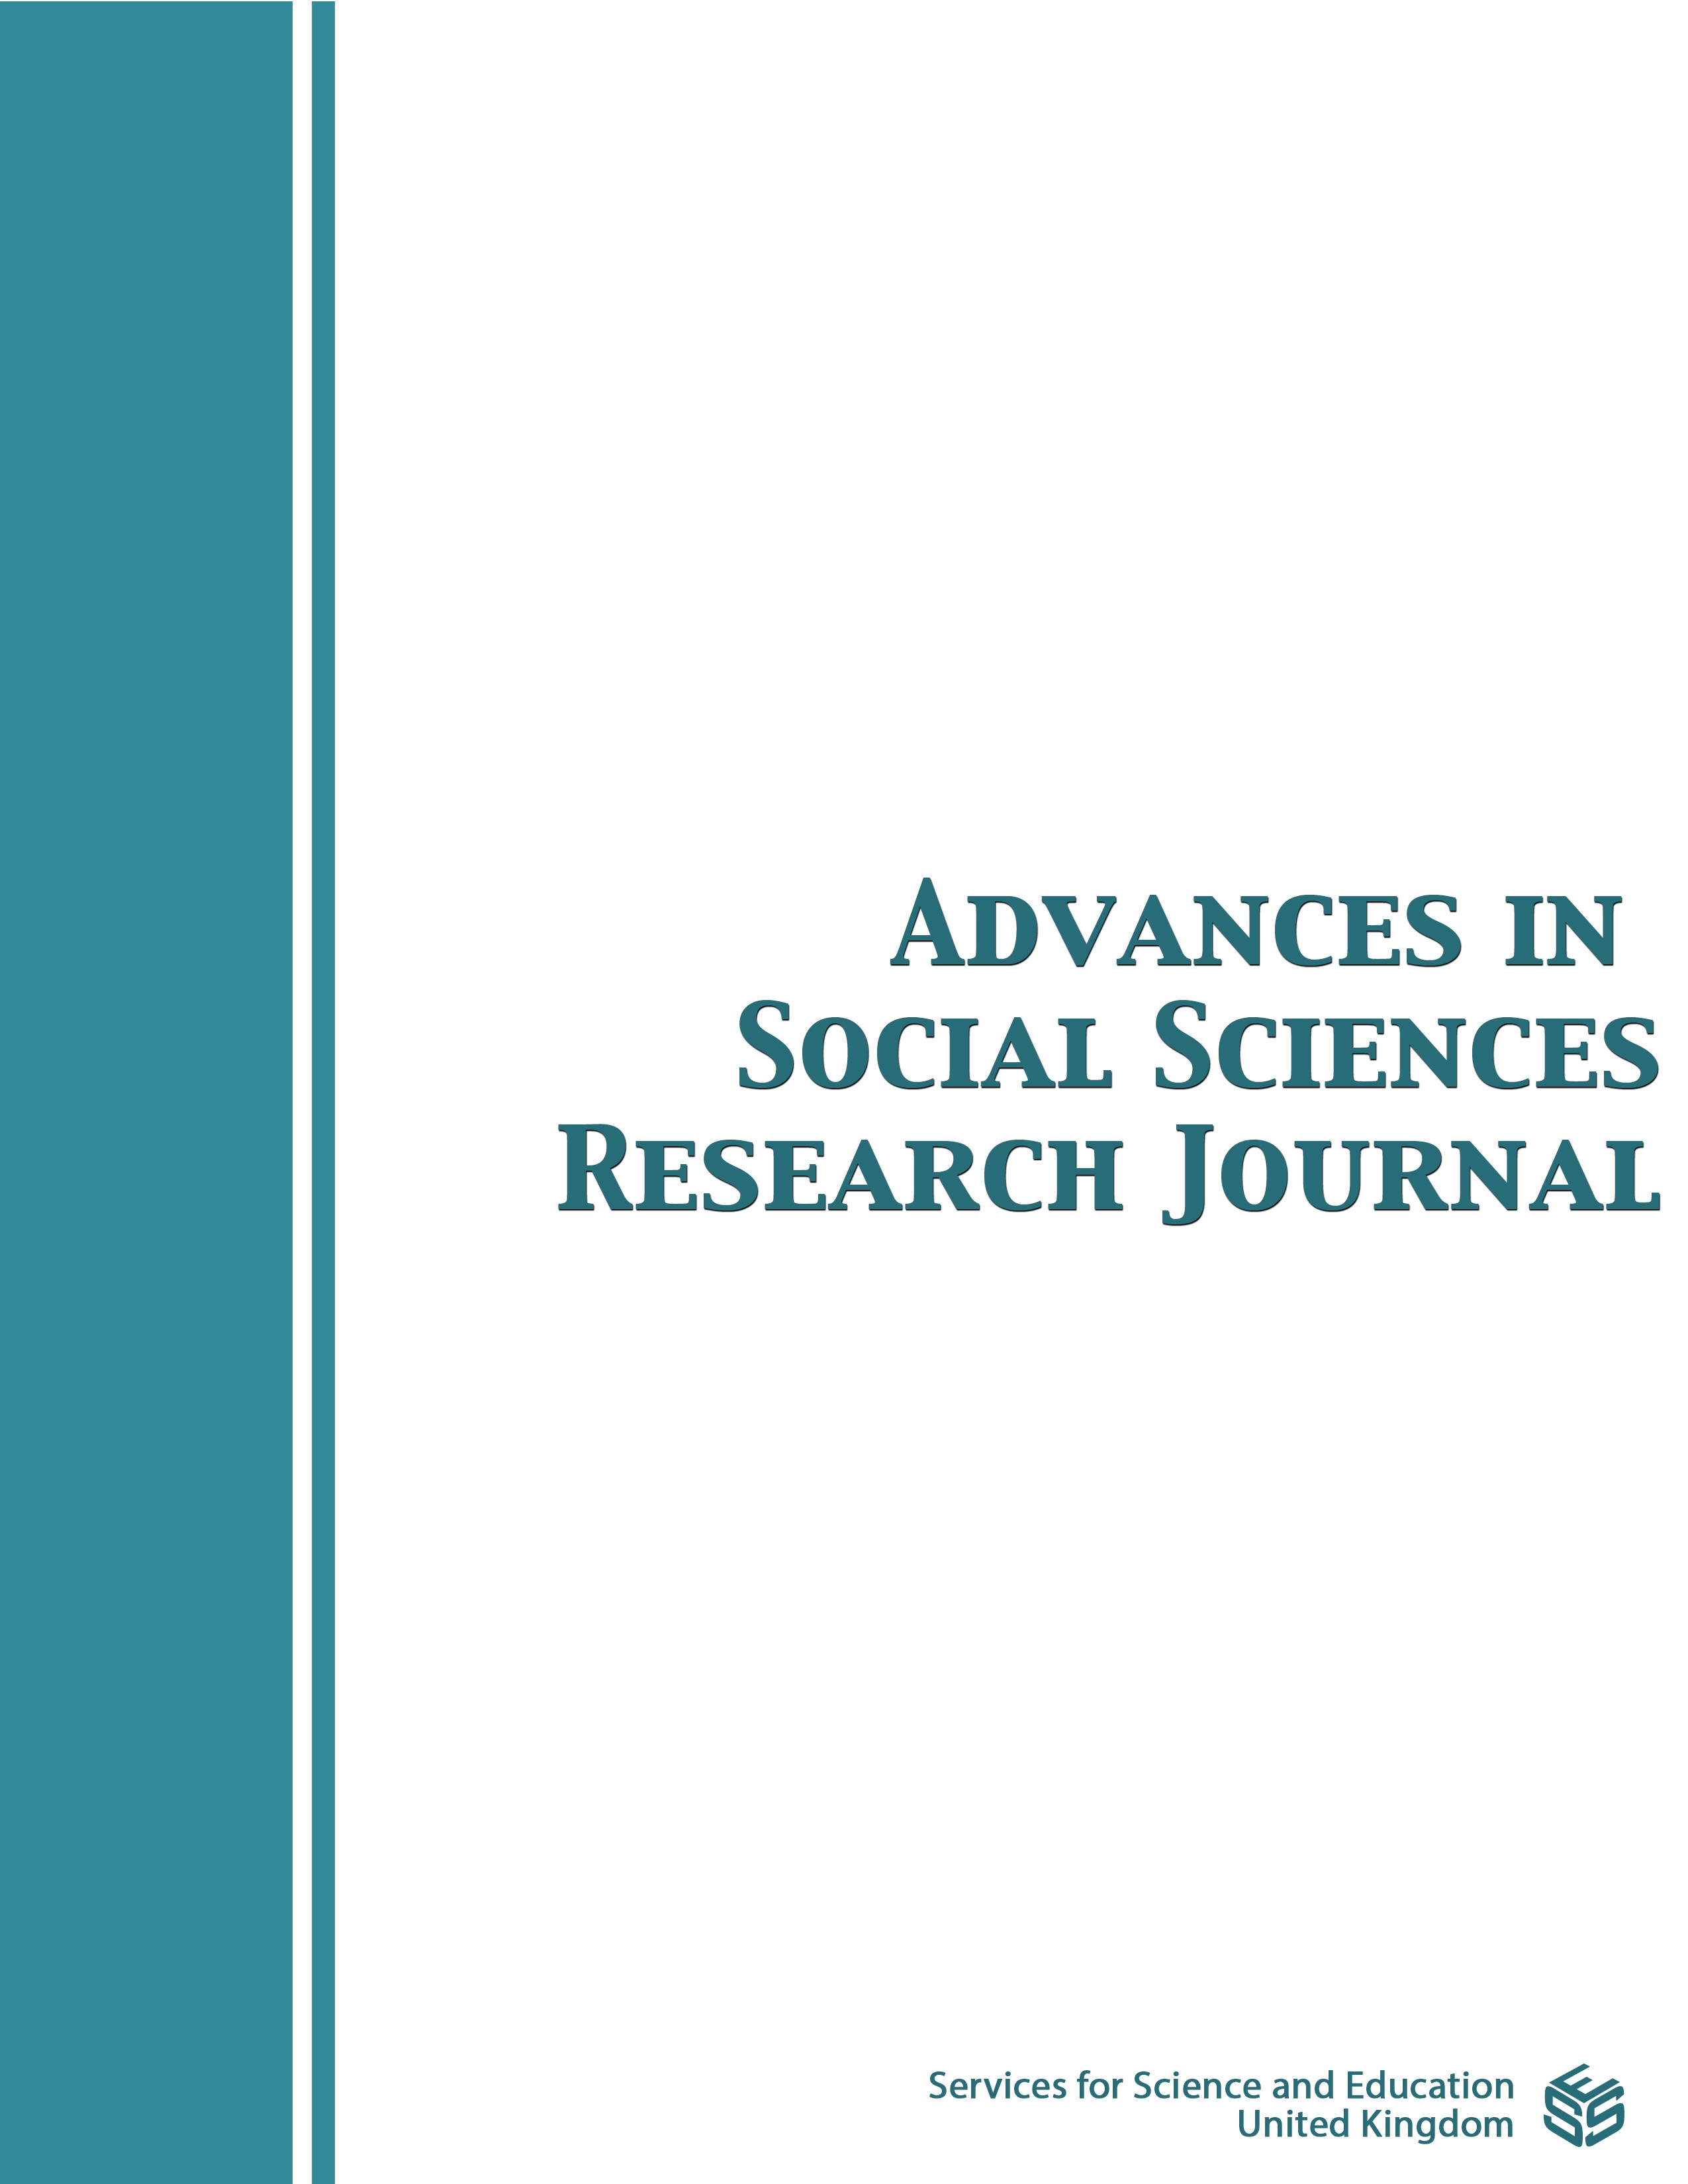 					View Vol. 8 No. 11 (2021): Advances in Social Sciences Research Journal 
				